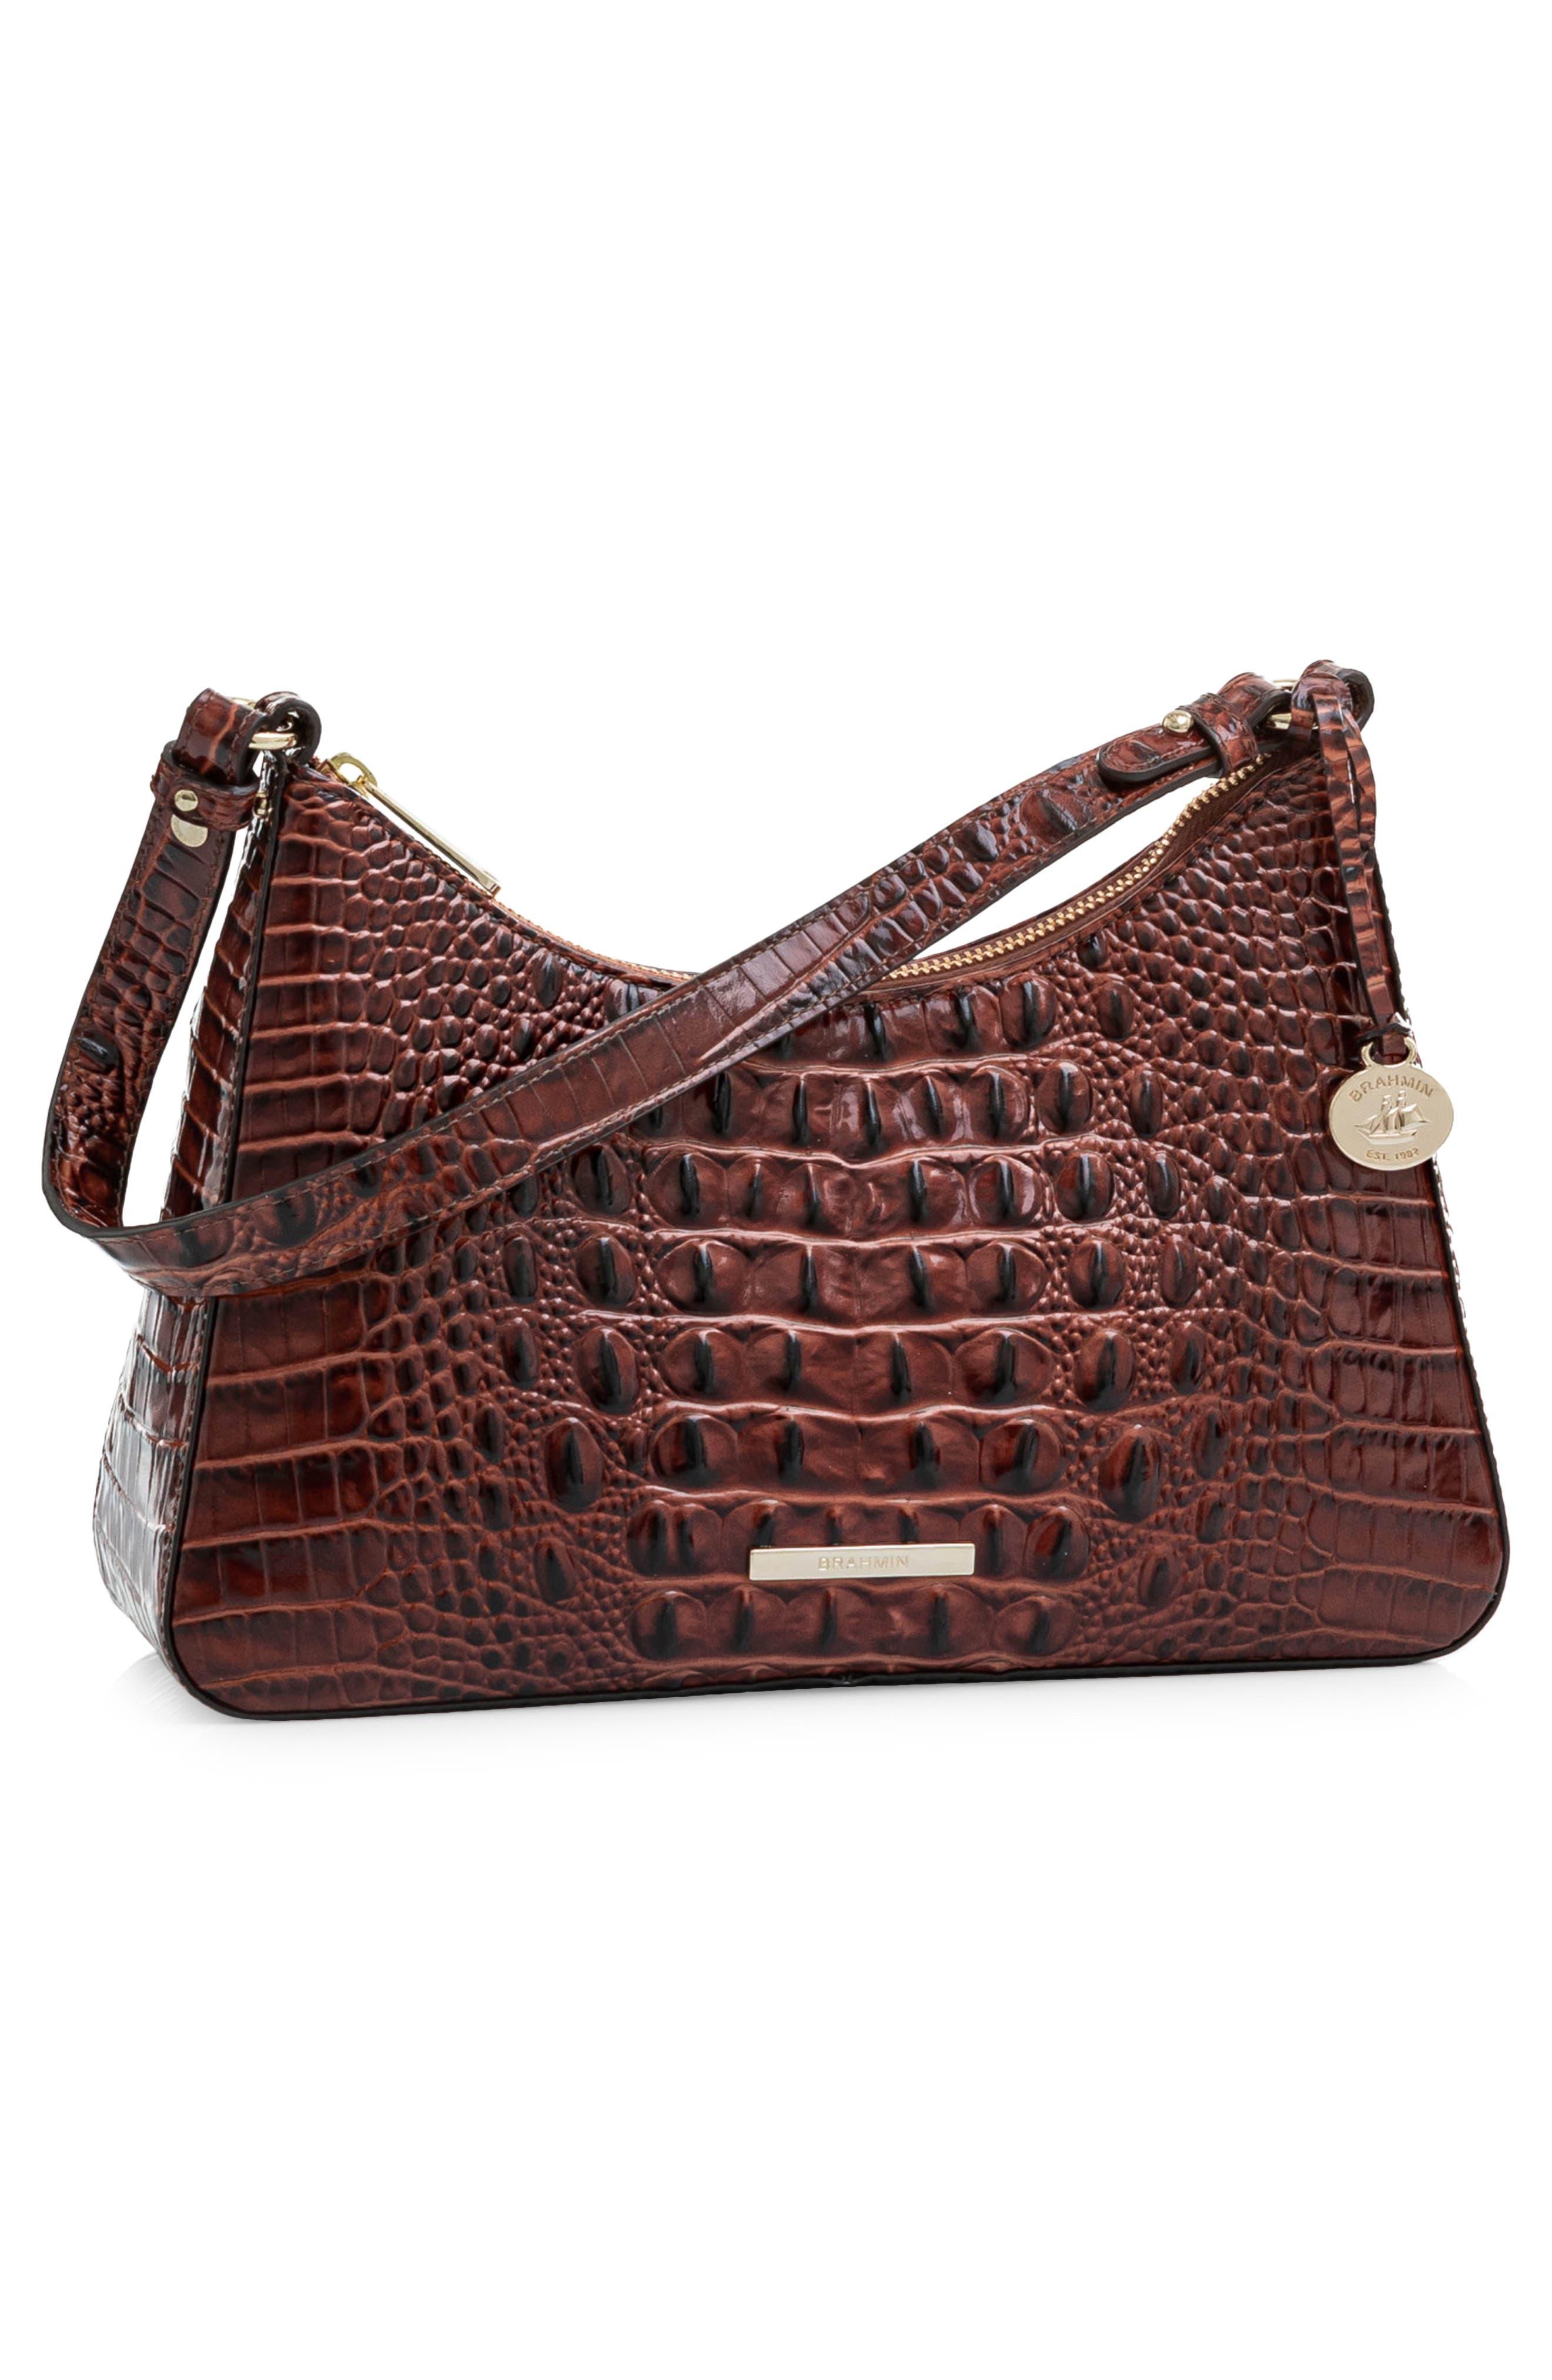 Pecan Brahmin Purse Handbag Embossed Leather Alligator Print -  Sweden